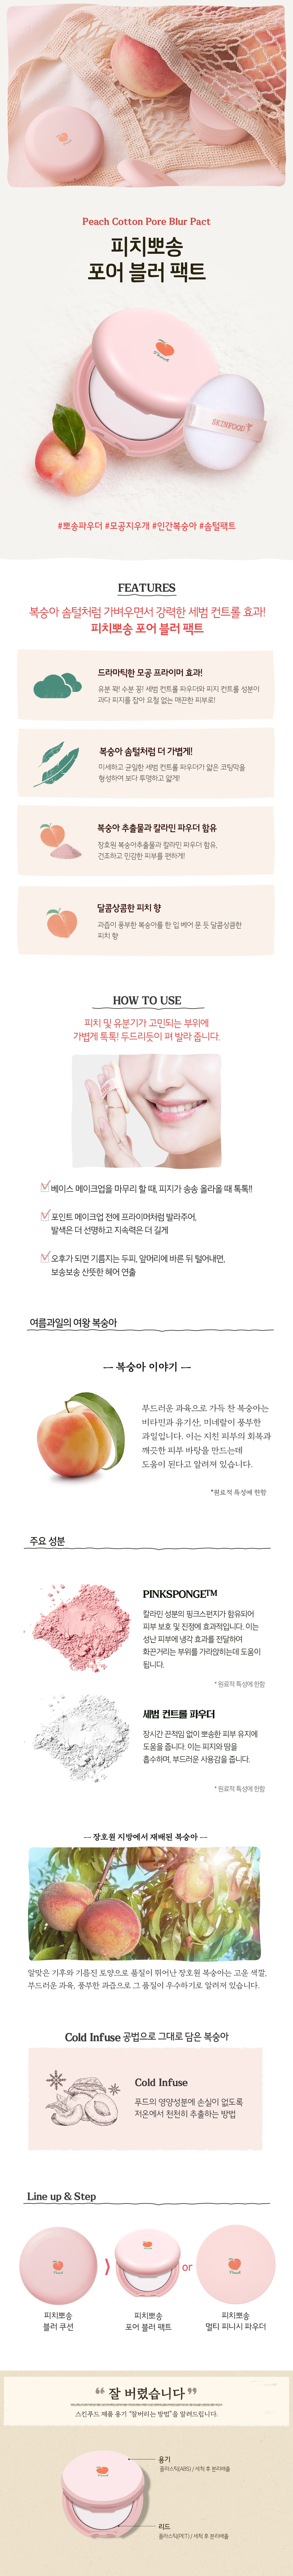 Skinfood Peach Cotton Pore Blur Pact korean skincare product online shop malaysia china macau1